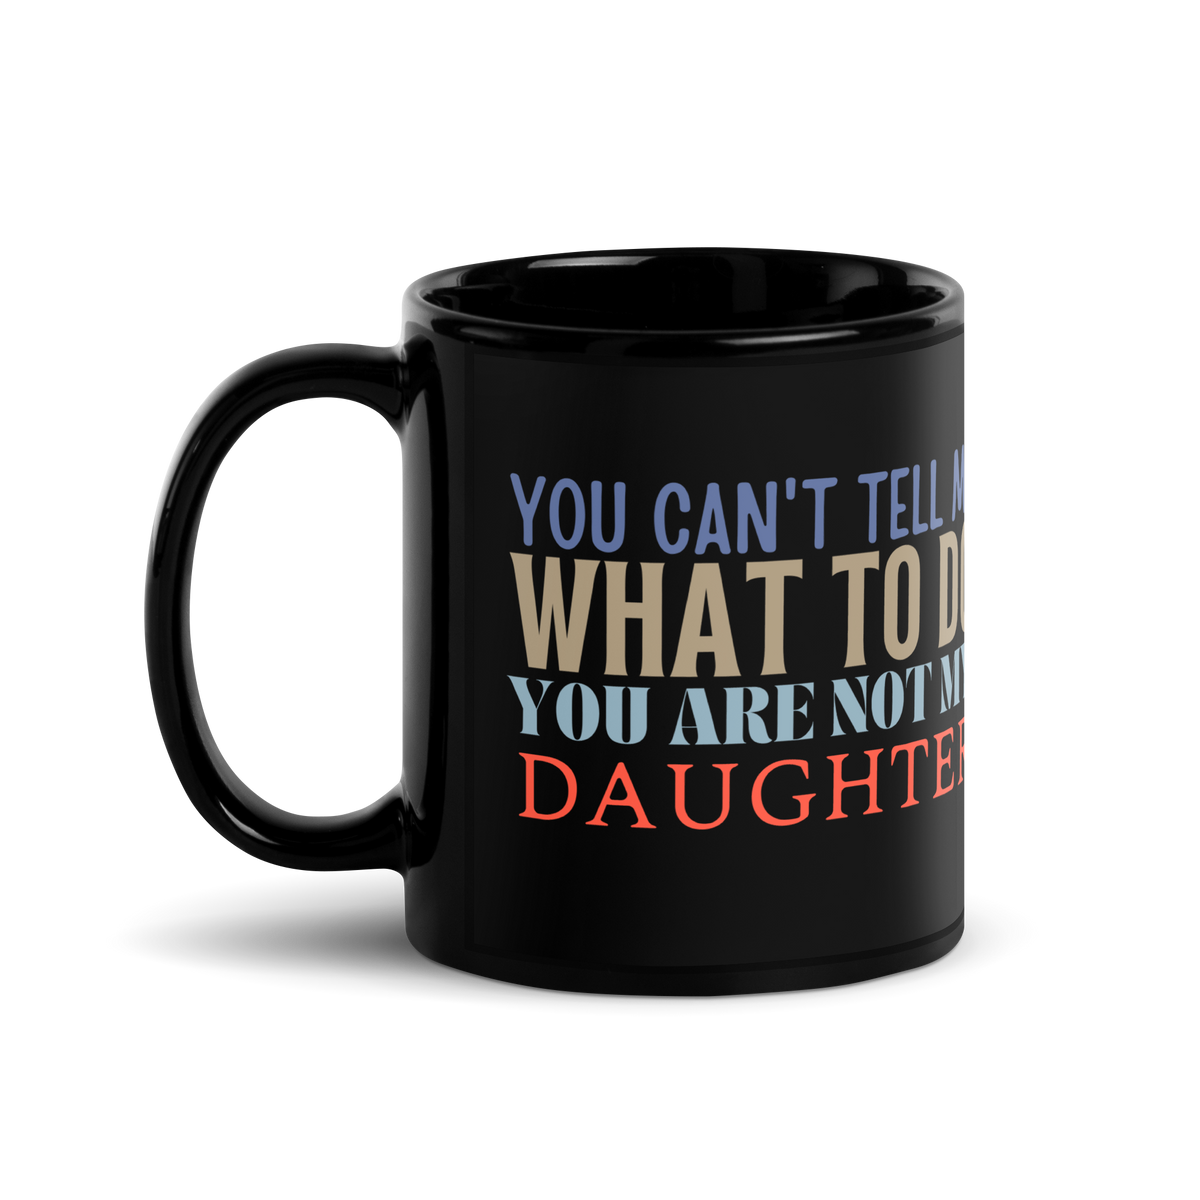 Coffee lovers, Dad Mug, Dad coffee mug, dad tea mug, mom mug, gift for her, gift for him, gift for mom, gift for dad, new papa gift, funny mom mug, funny dad mug, father mug, you can't tell me what to do you are not my daughter, mug, coffee mug, cup, tea mug